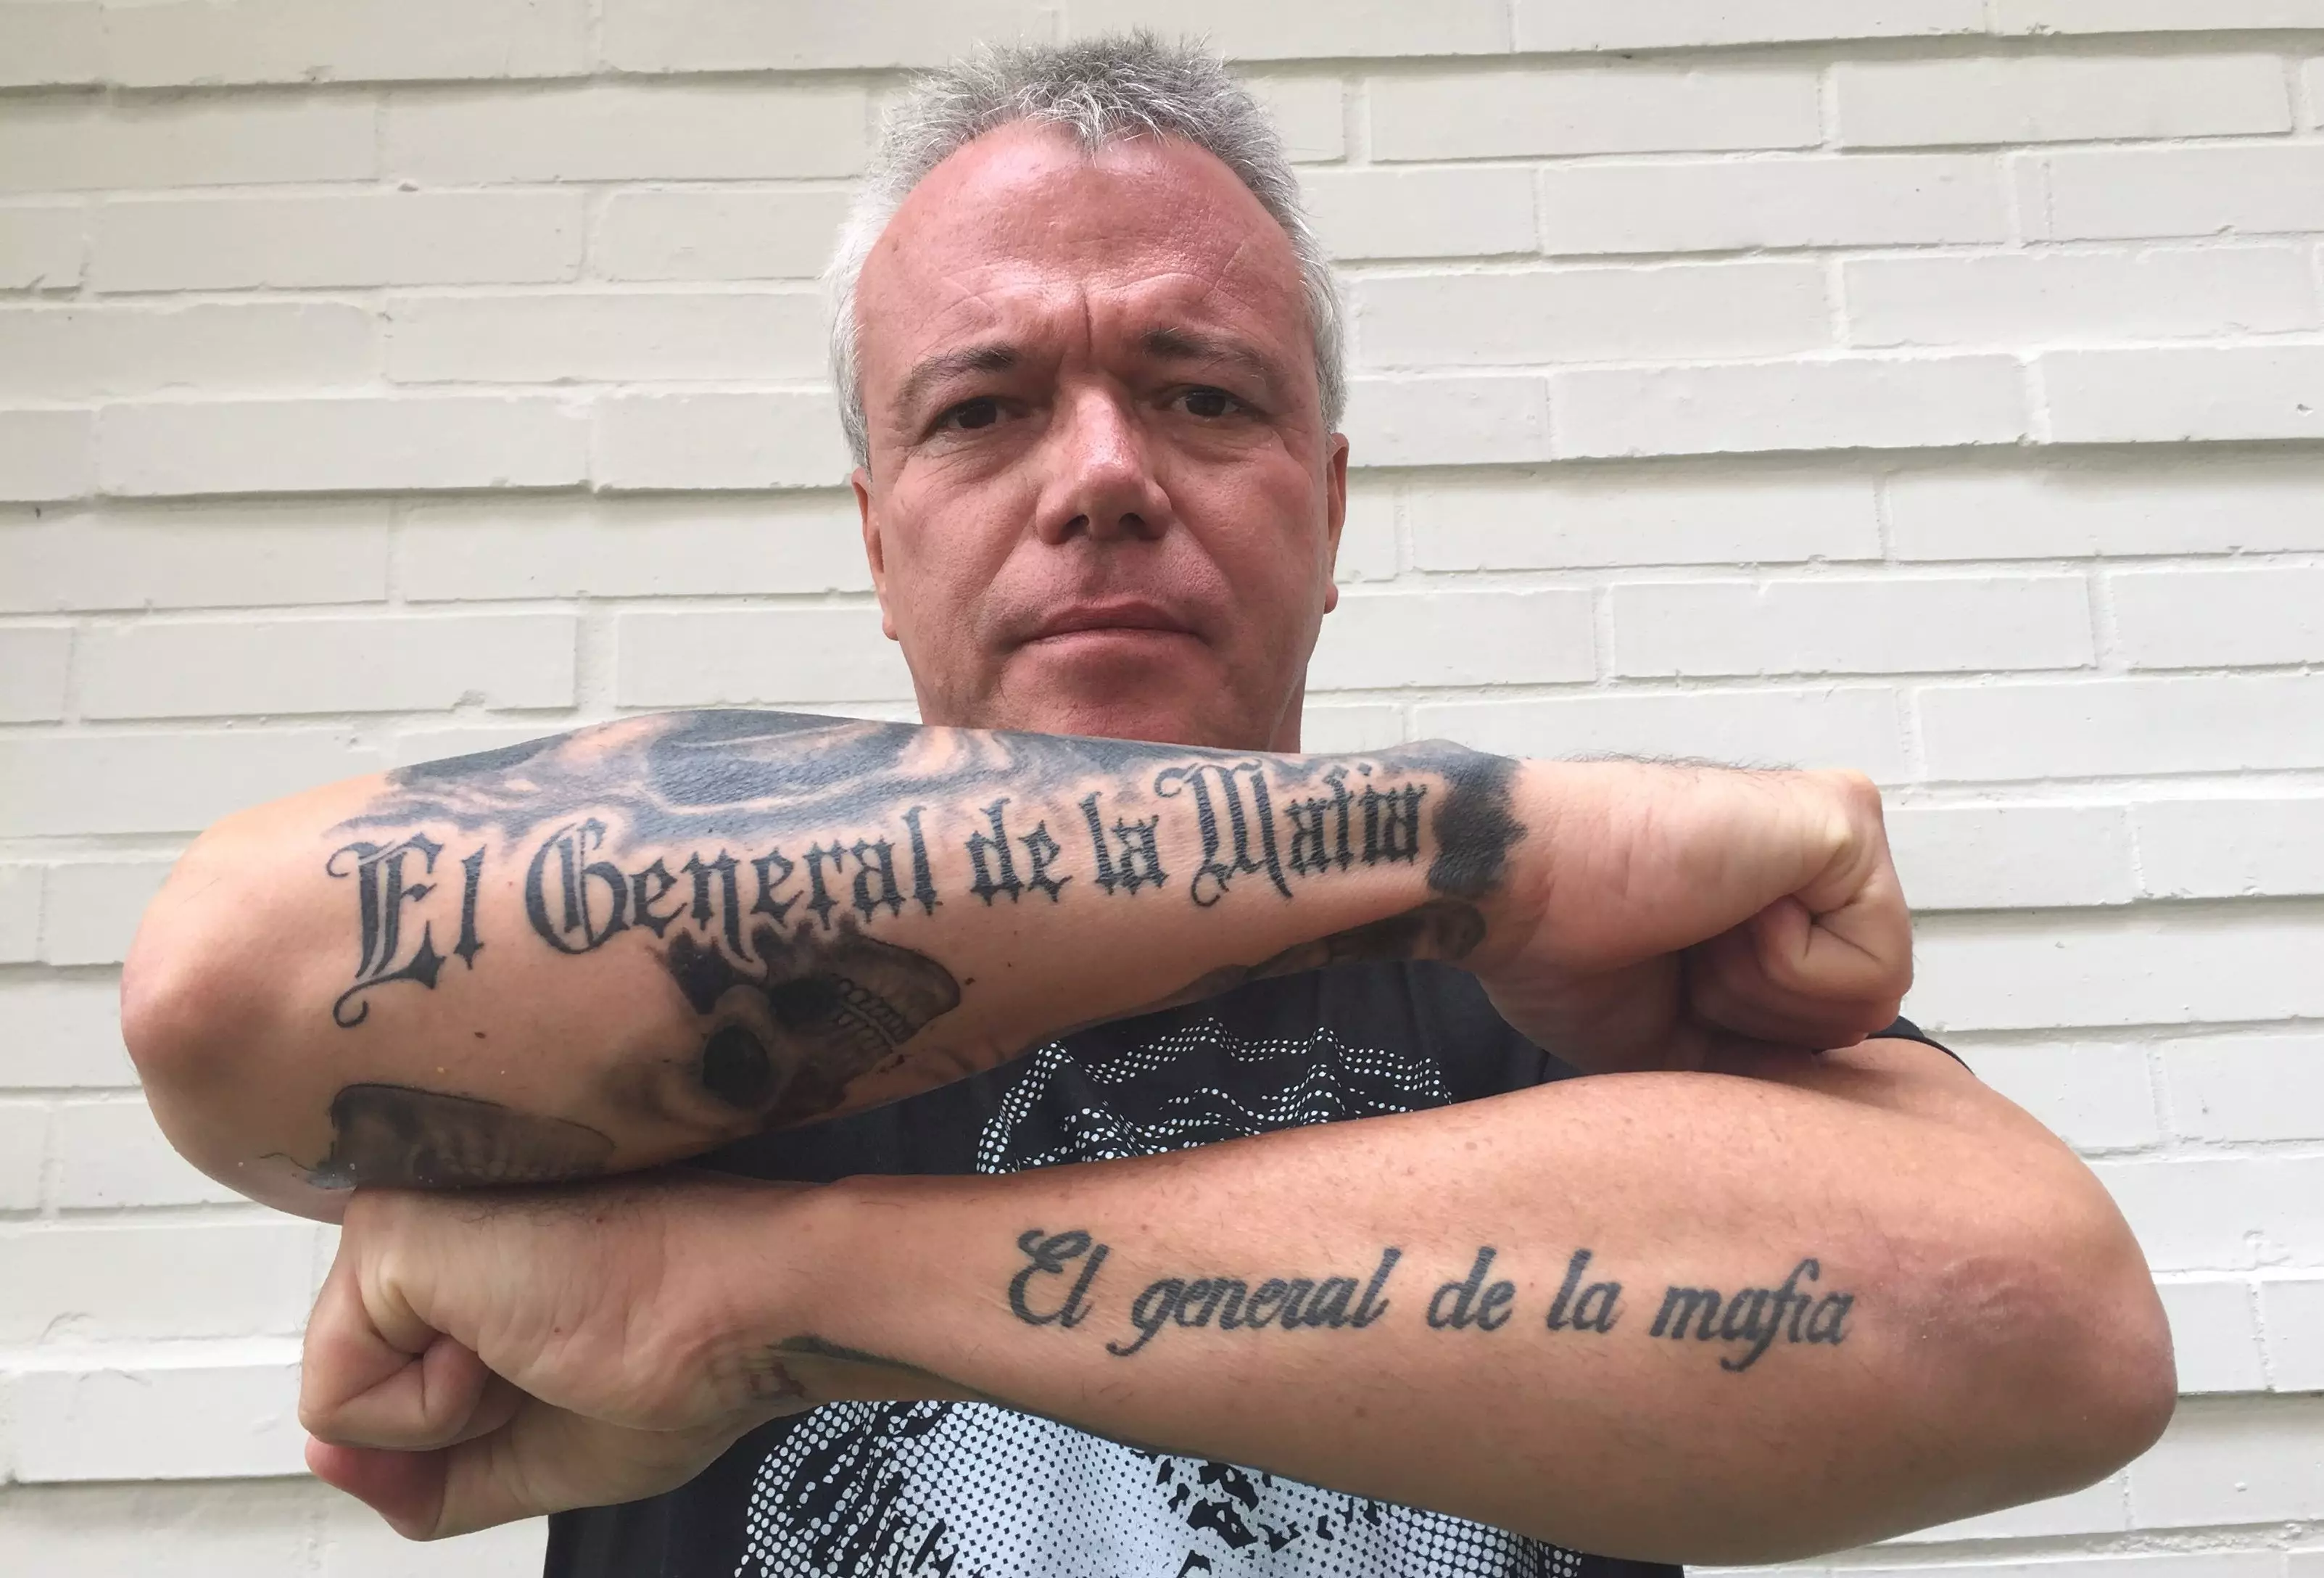 Popeye showing off his tattoos which read: 'El General de la Mafia' translation: The general of the mafia.